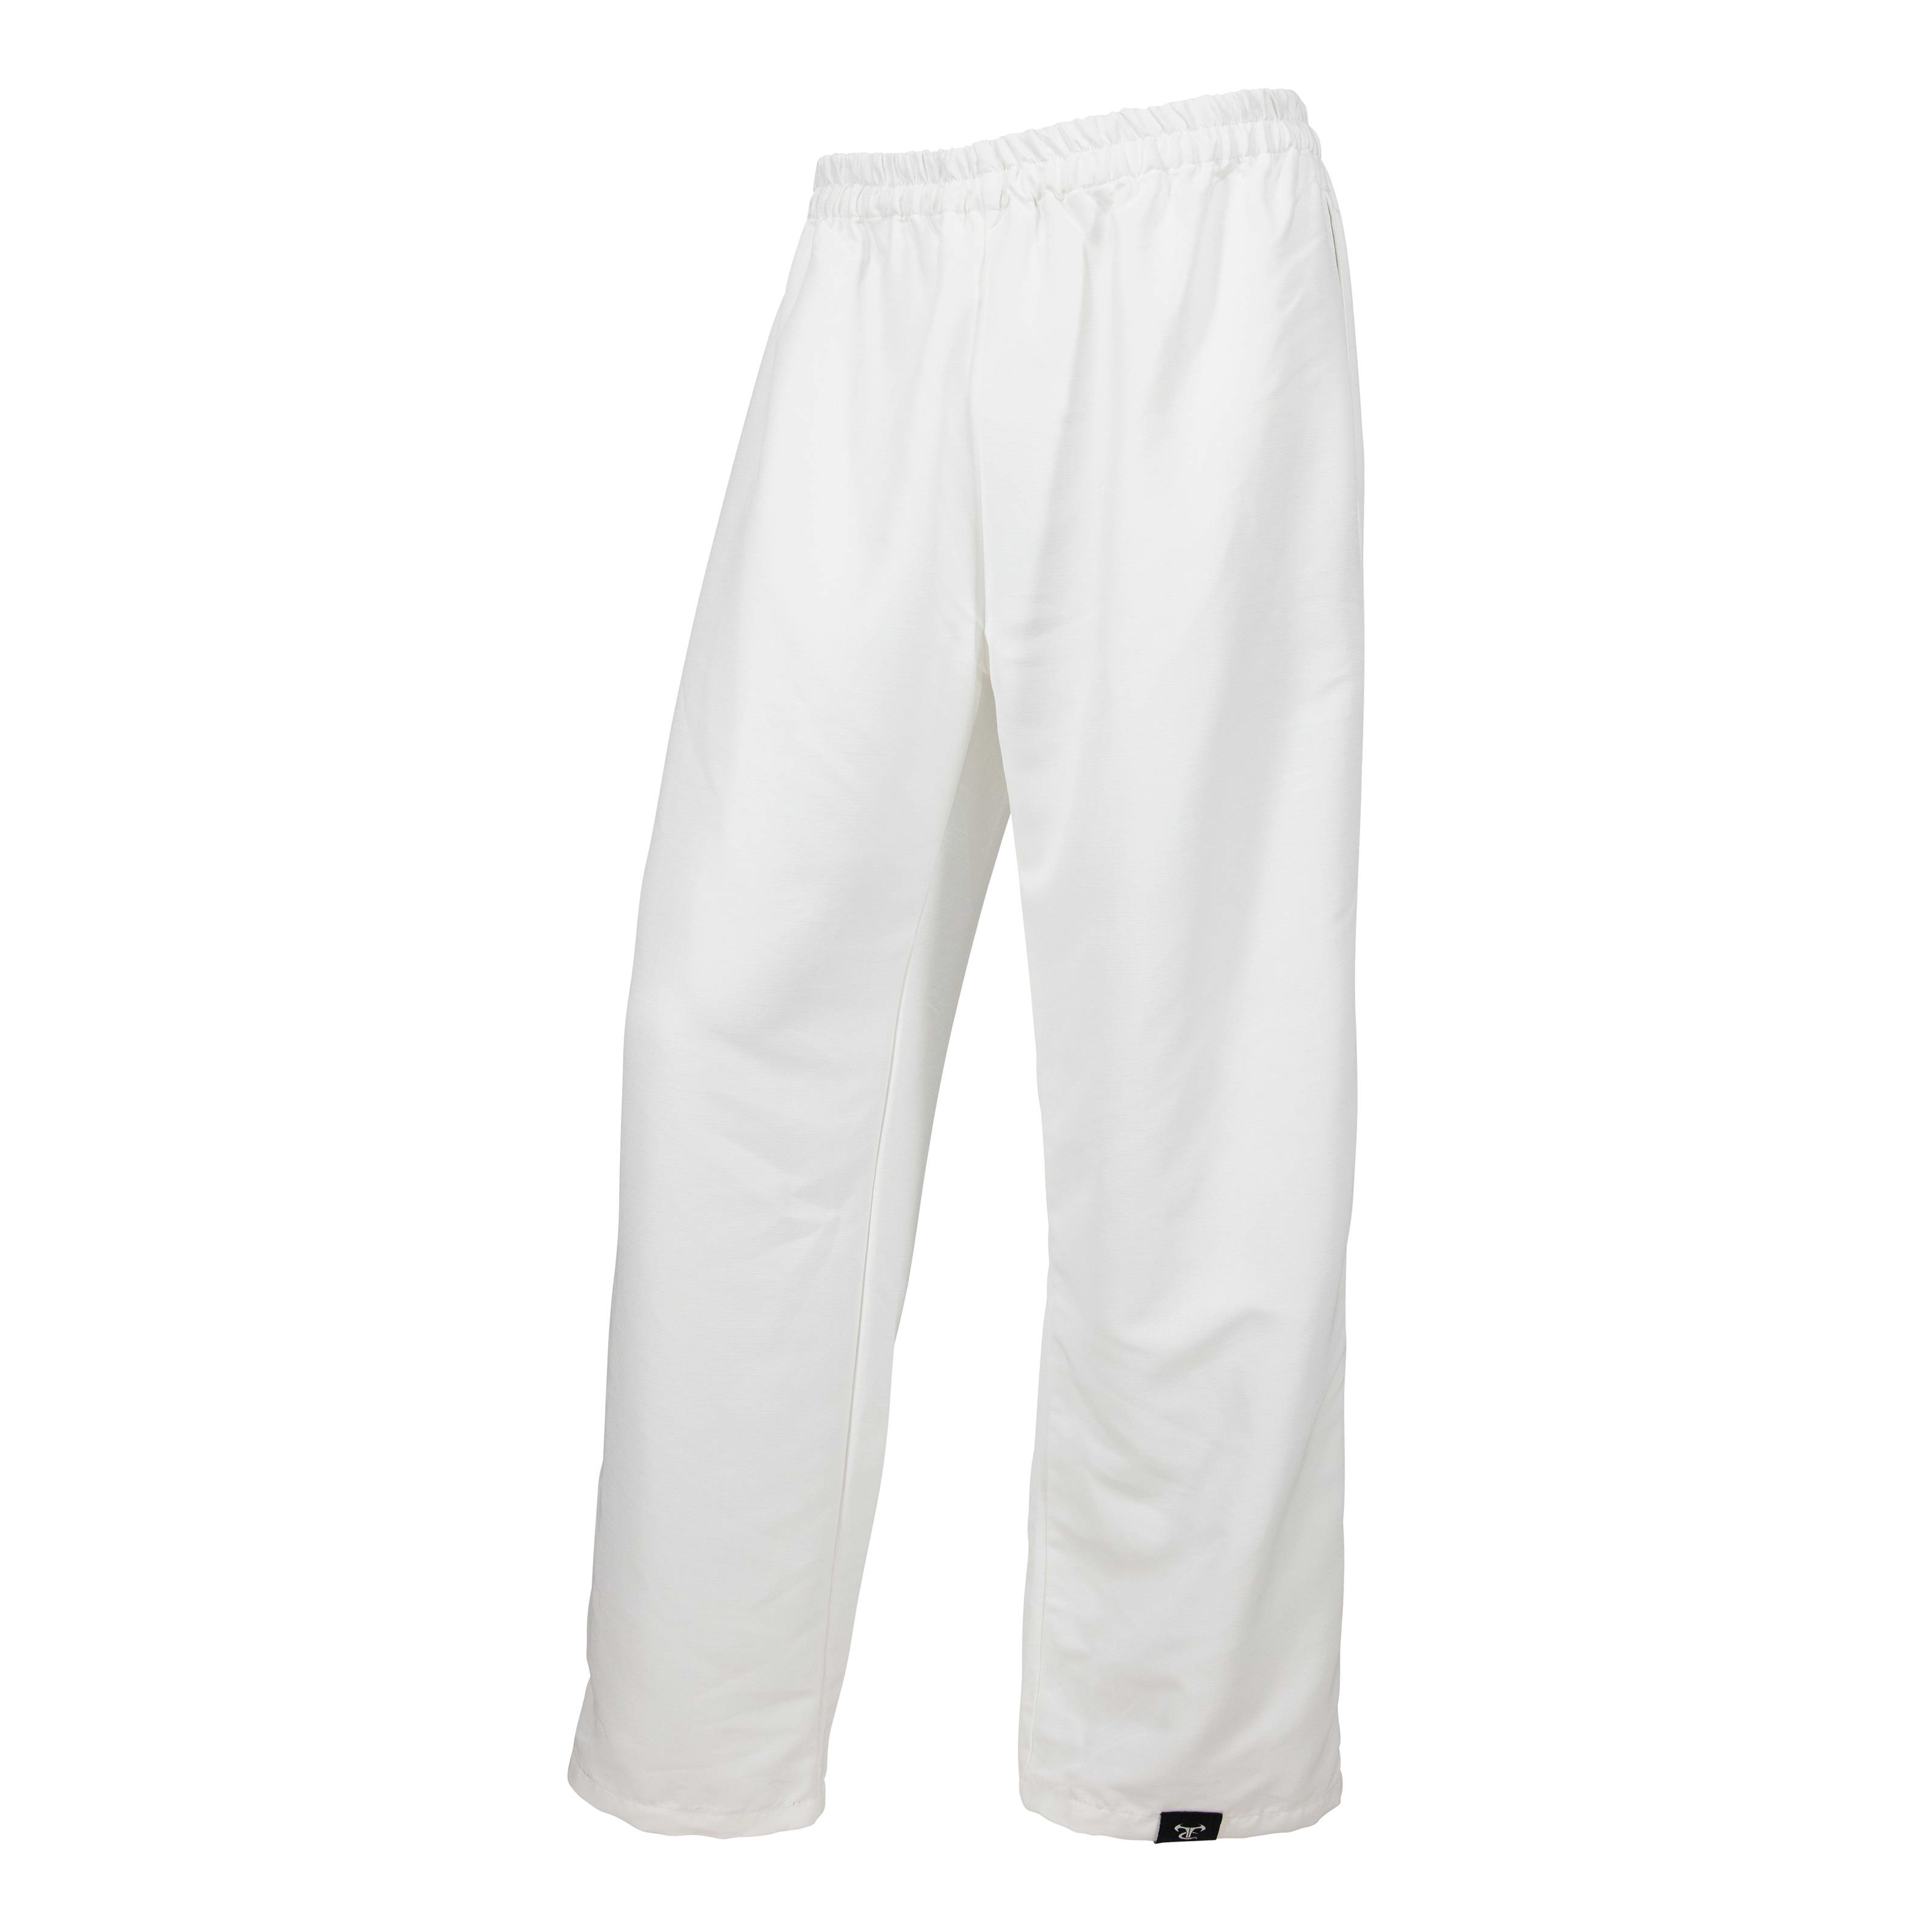 TrueTimber® Men’s Lightweight Snow Camo Coverup Pants - Solid White